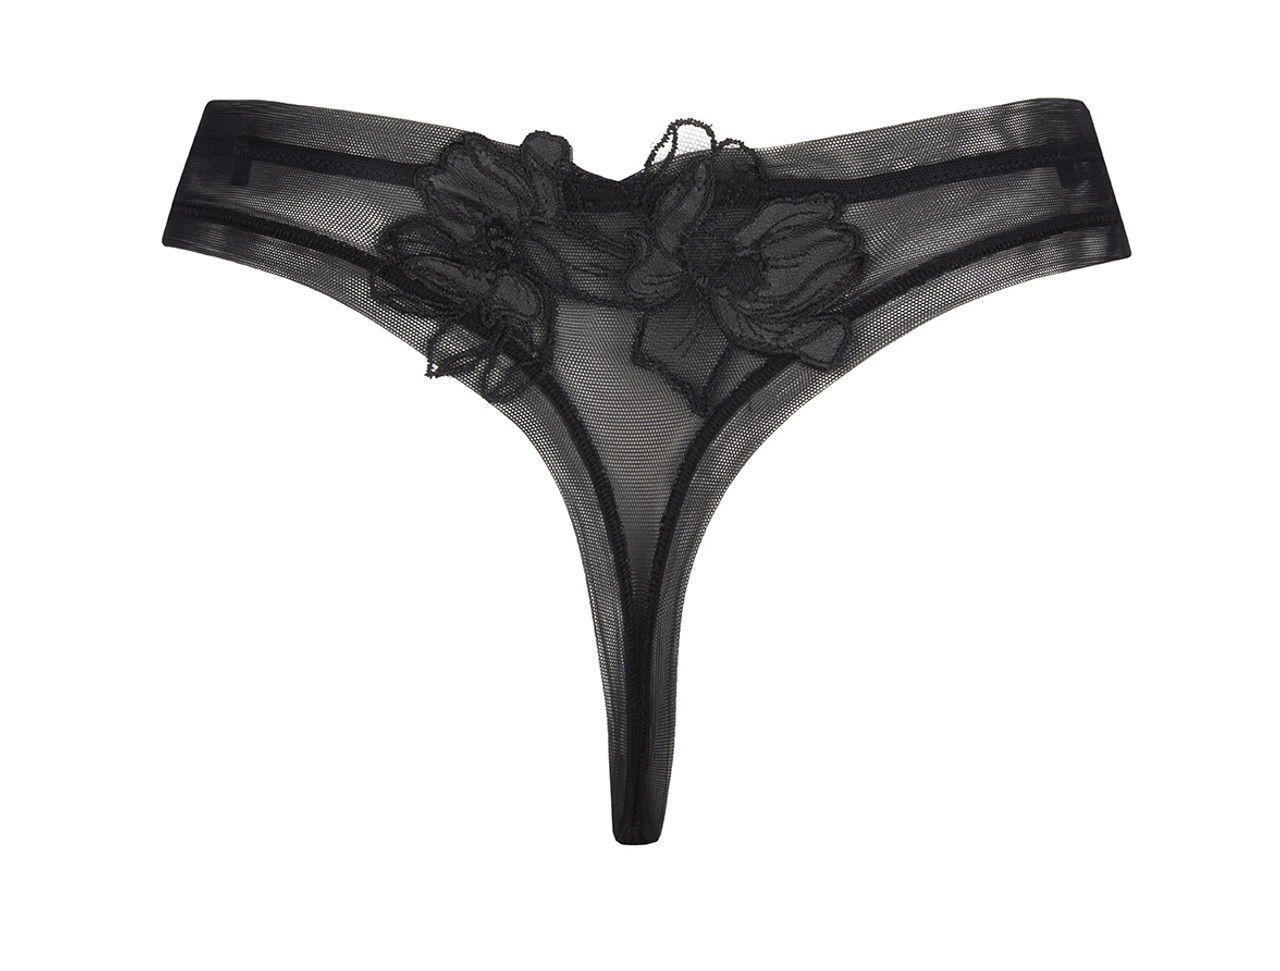 Lise Charmel Lingerie Feerie Couture thong sexy black Calais lace ACH0574